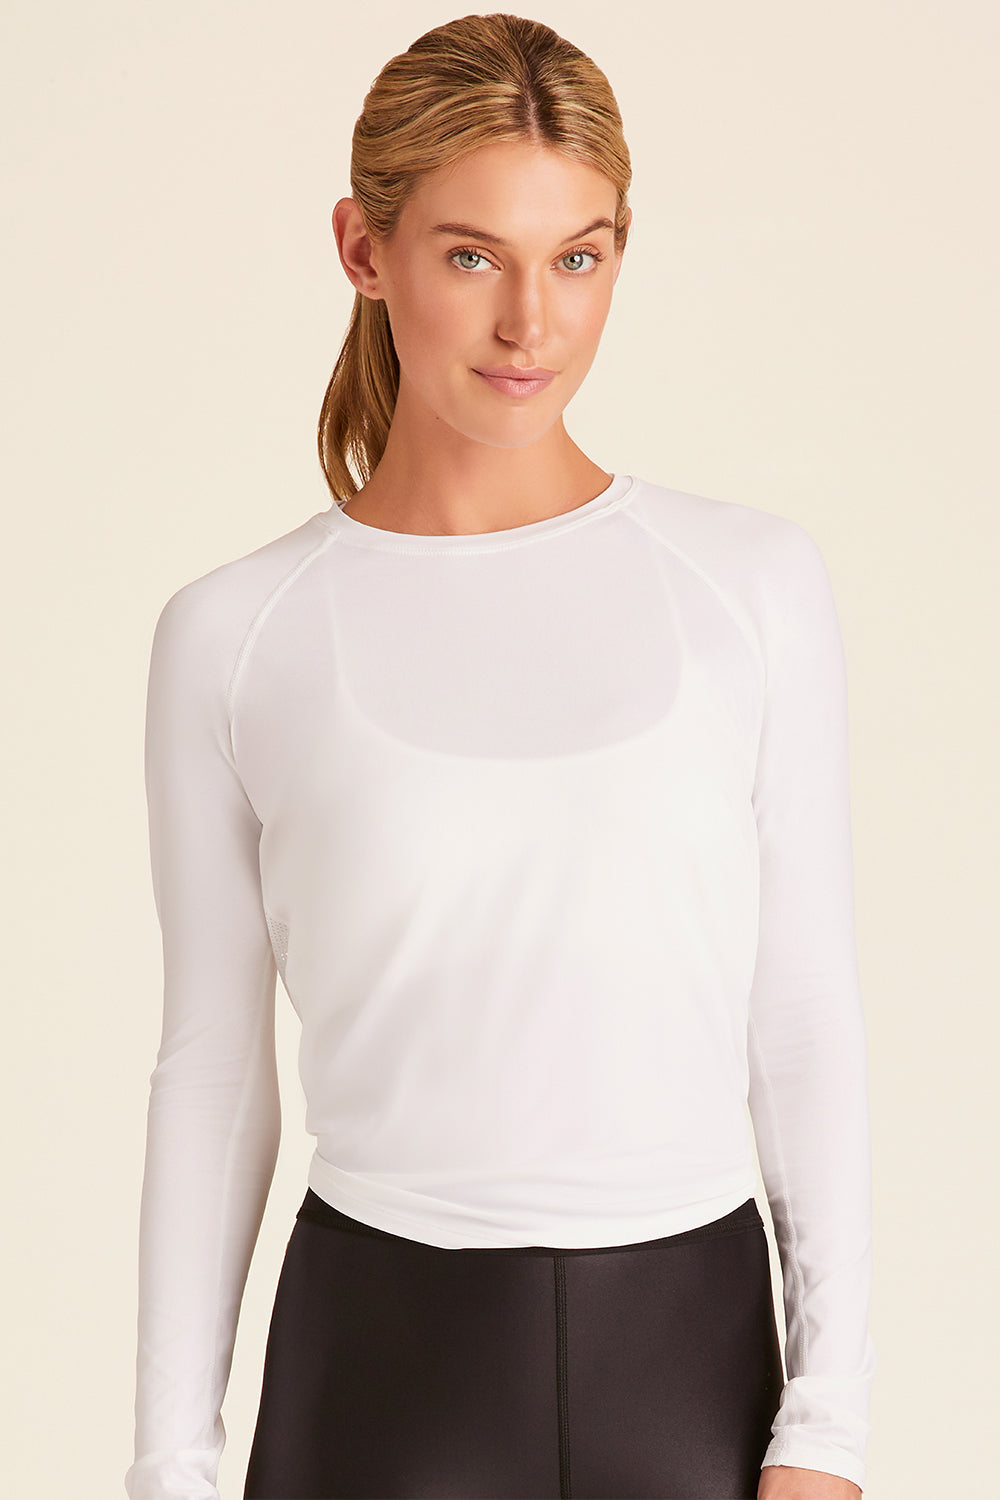 Tie Back Long Sleeve - White Flowy Shirt, Womens Workout Shirts